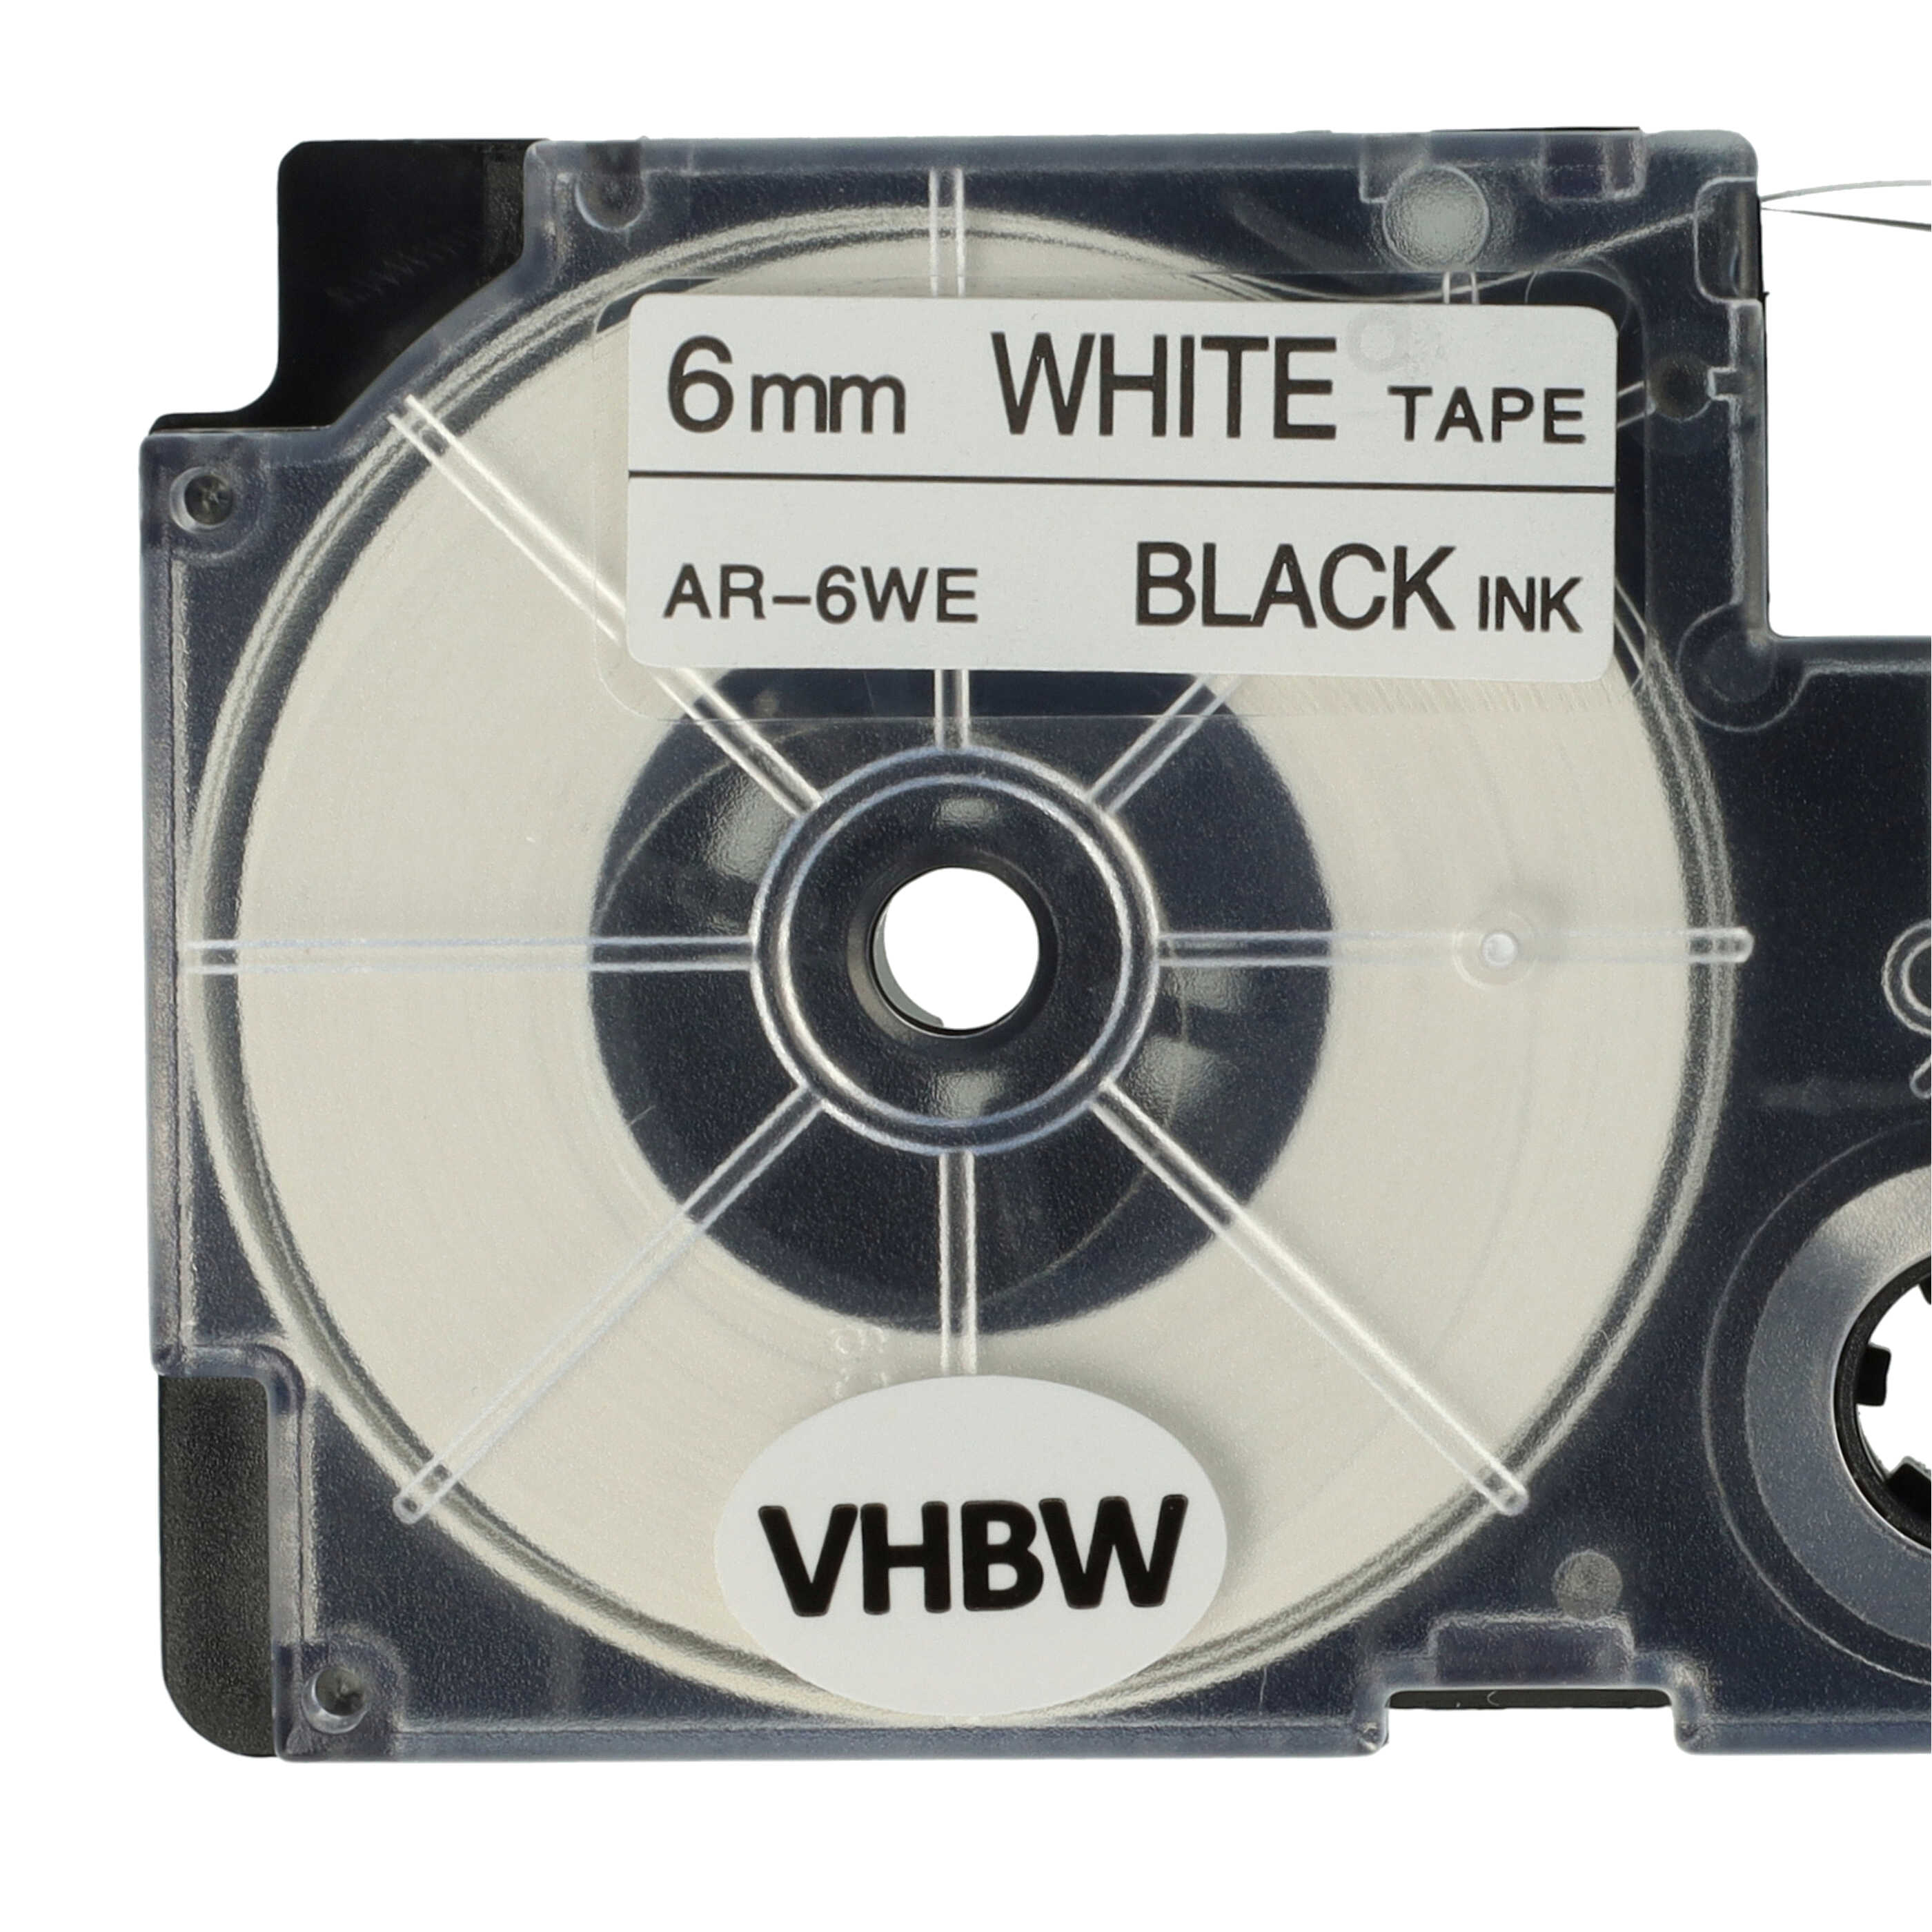 Cassetta nastro sostituisce Casio XR-6WE, XR-6WE1 per etichettatrice Casio 6mm nero su bianco